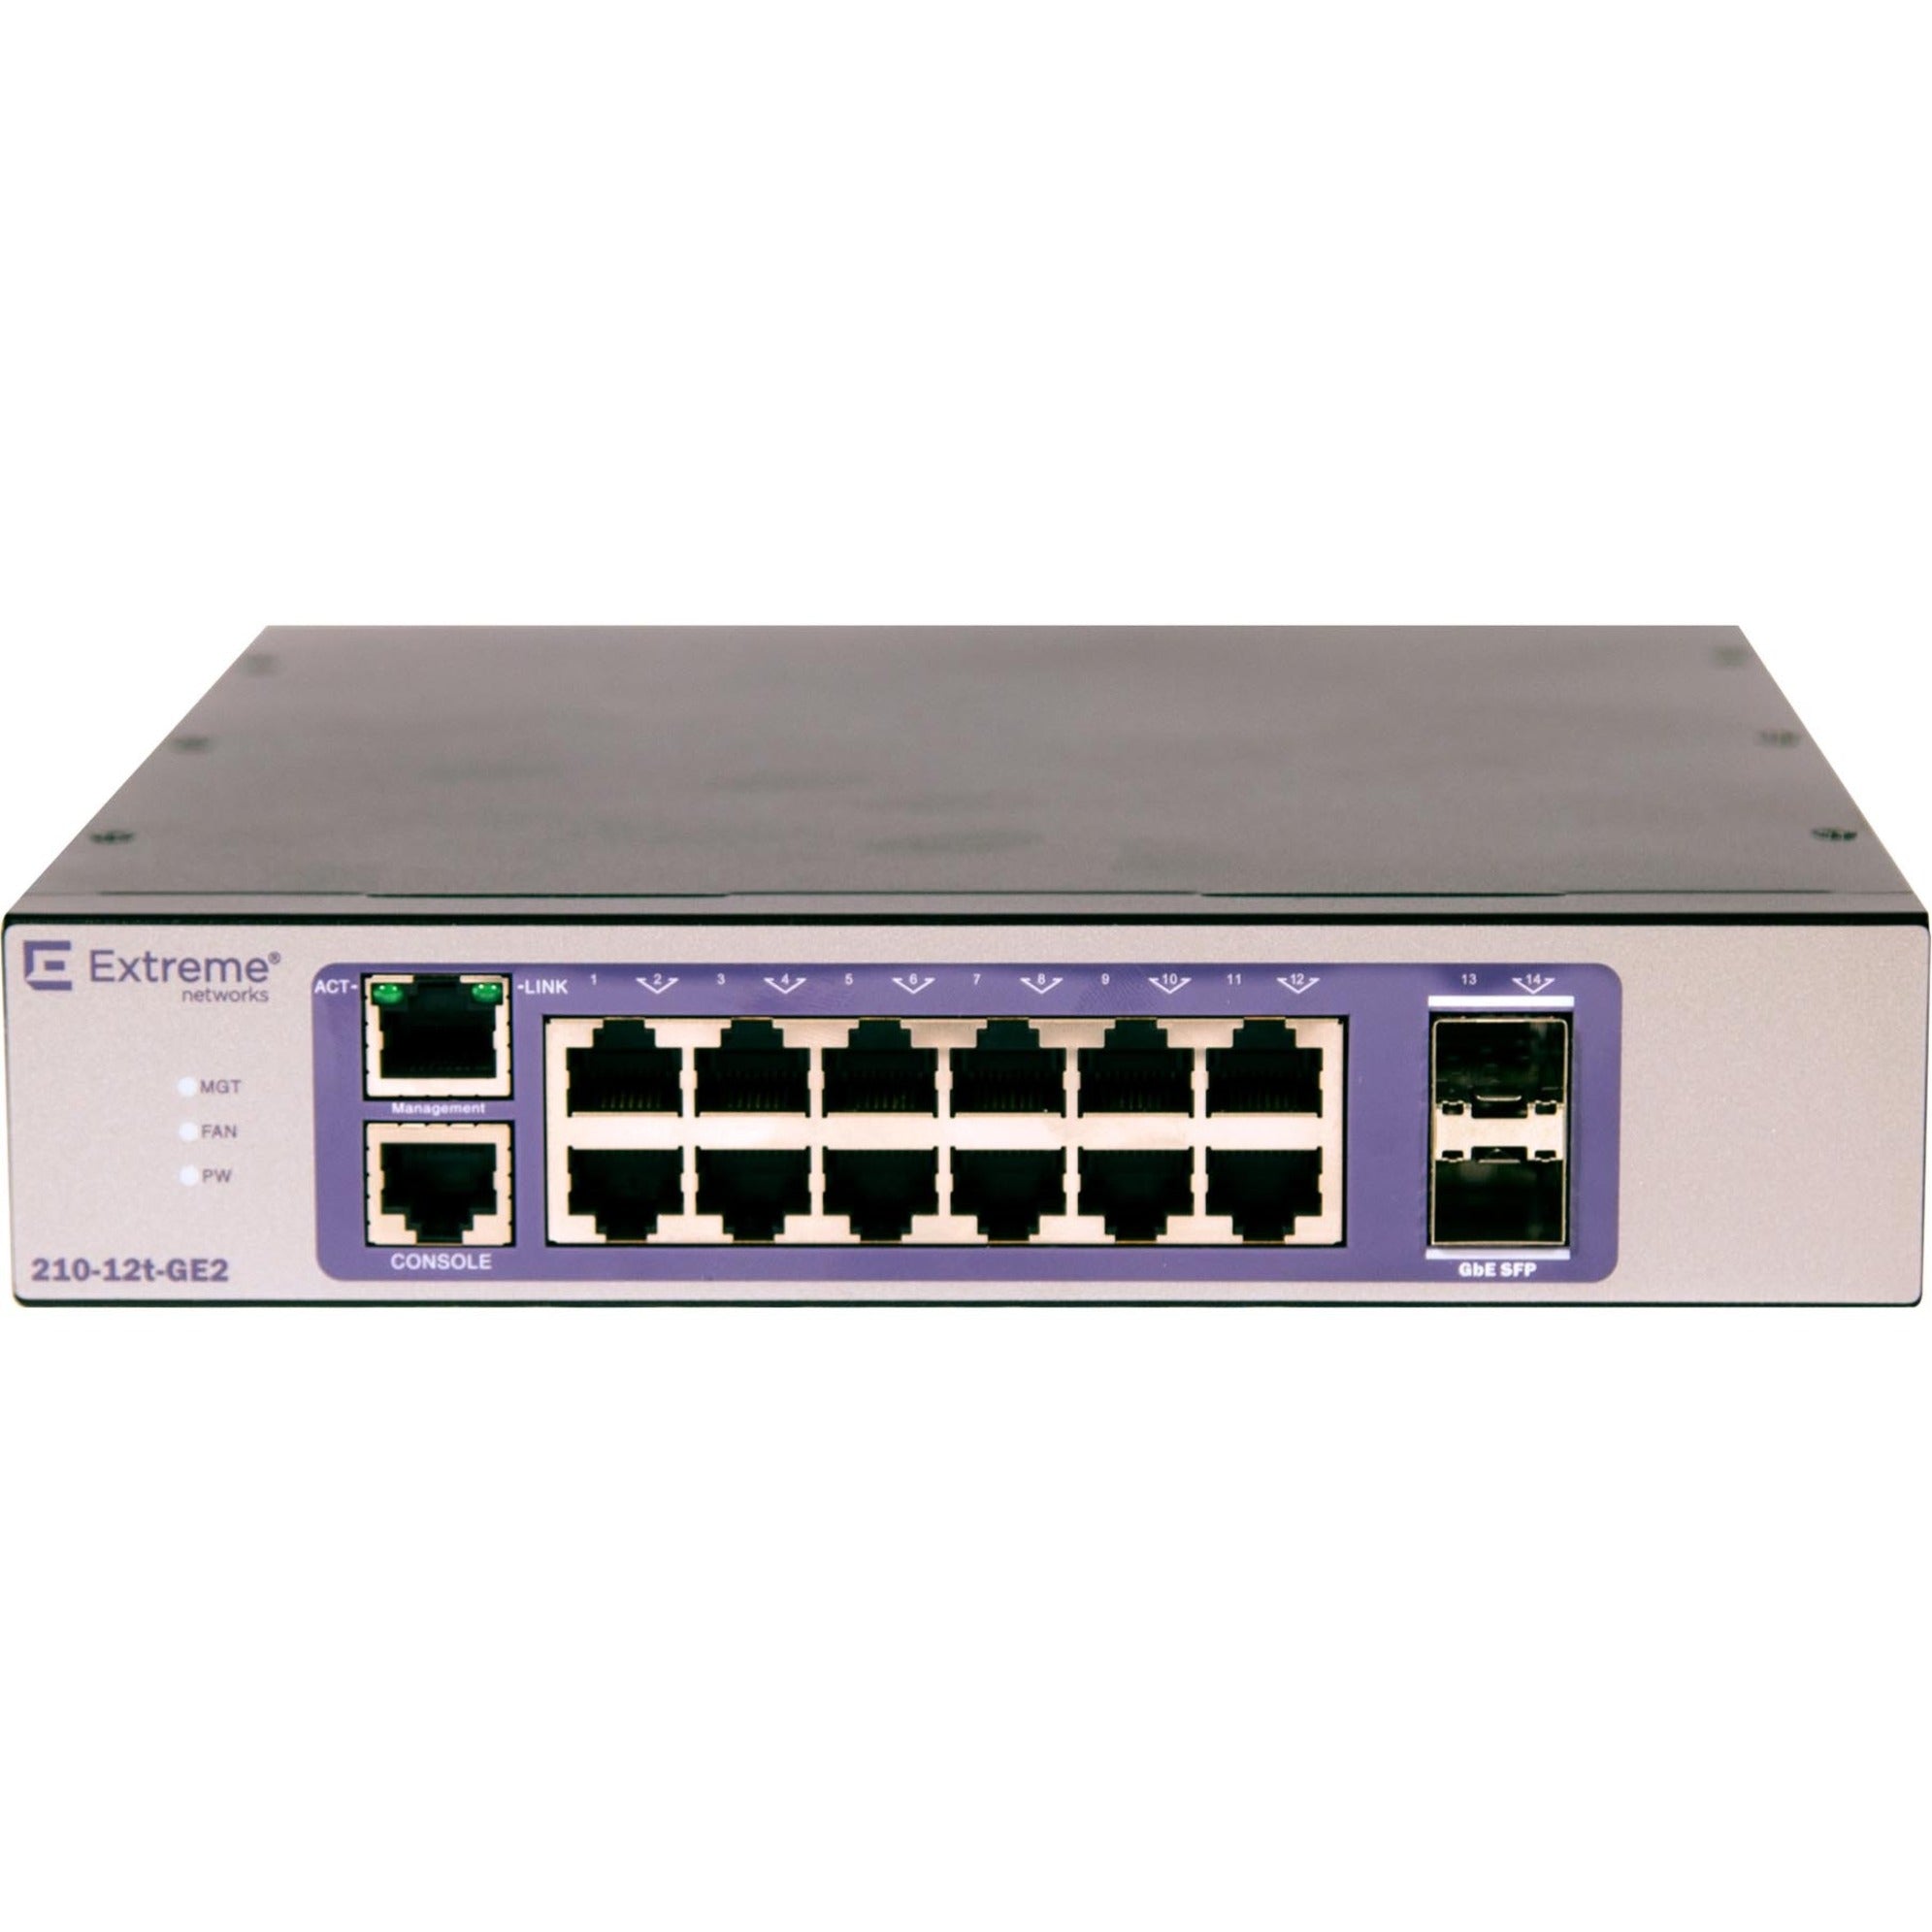 Extreme Networks 16566 210-12t-GE2 Ethernet Switch, Gigabit Ethernet, 12 Network Ports